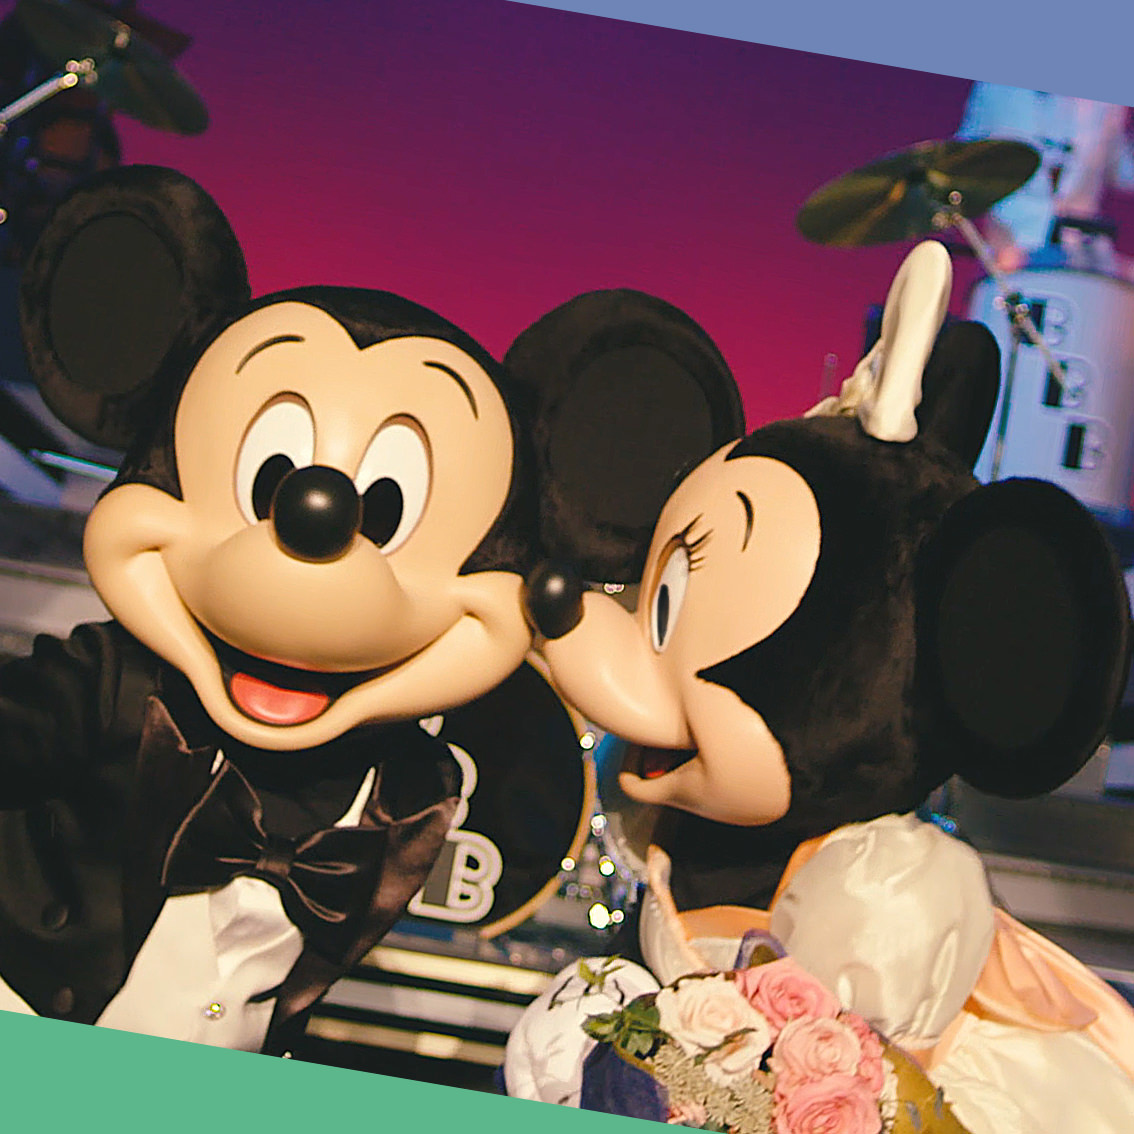 Happy birthday Mickey and Minnie!